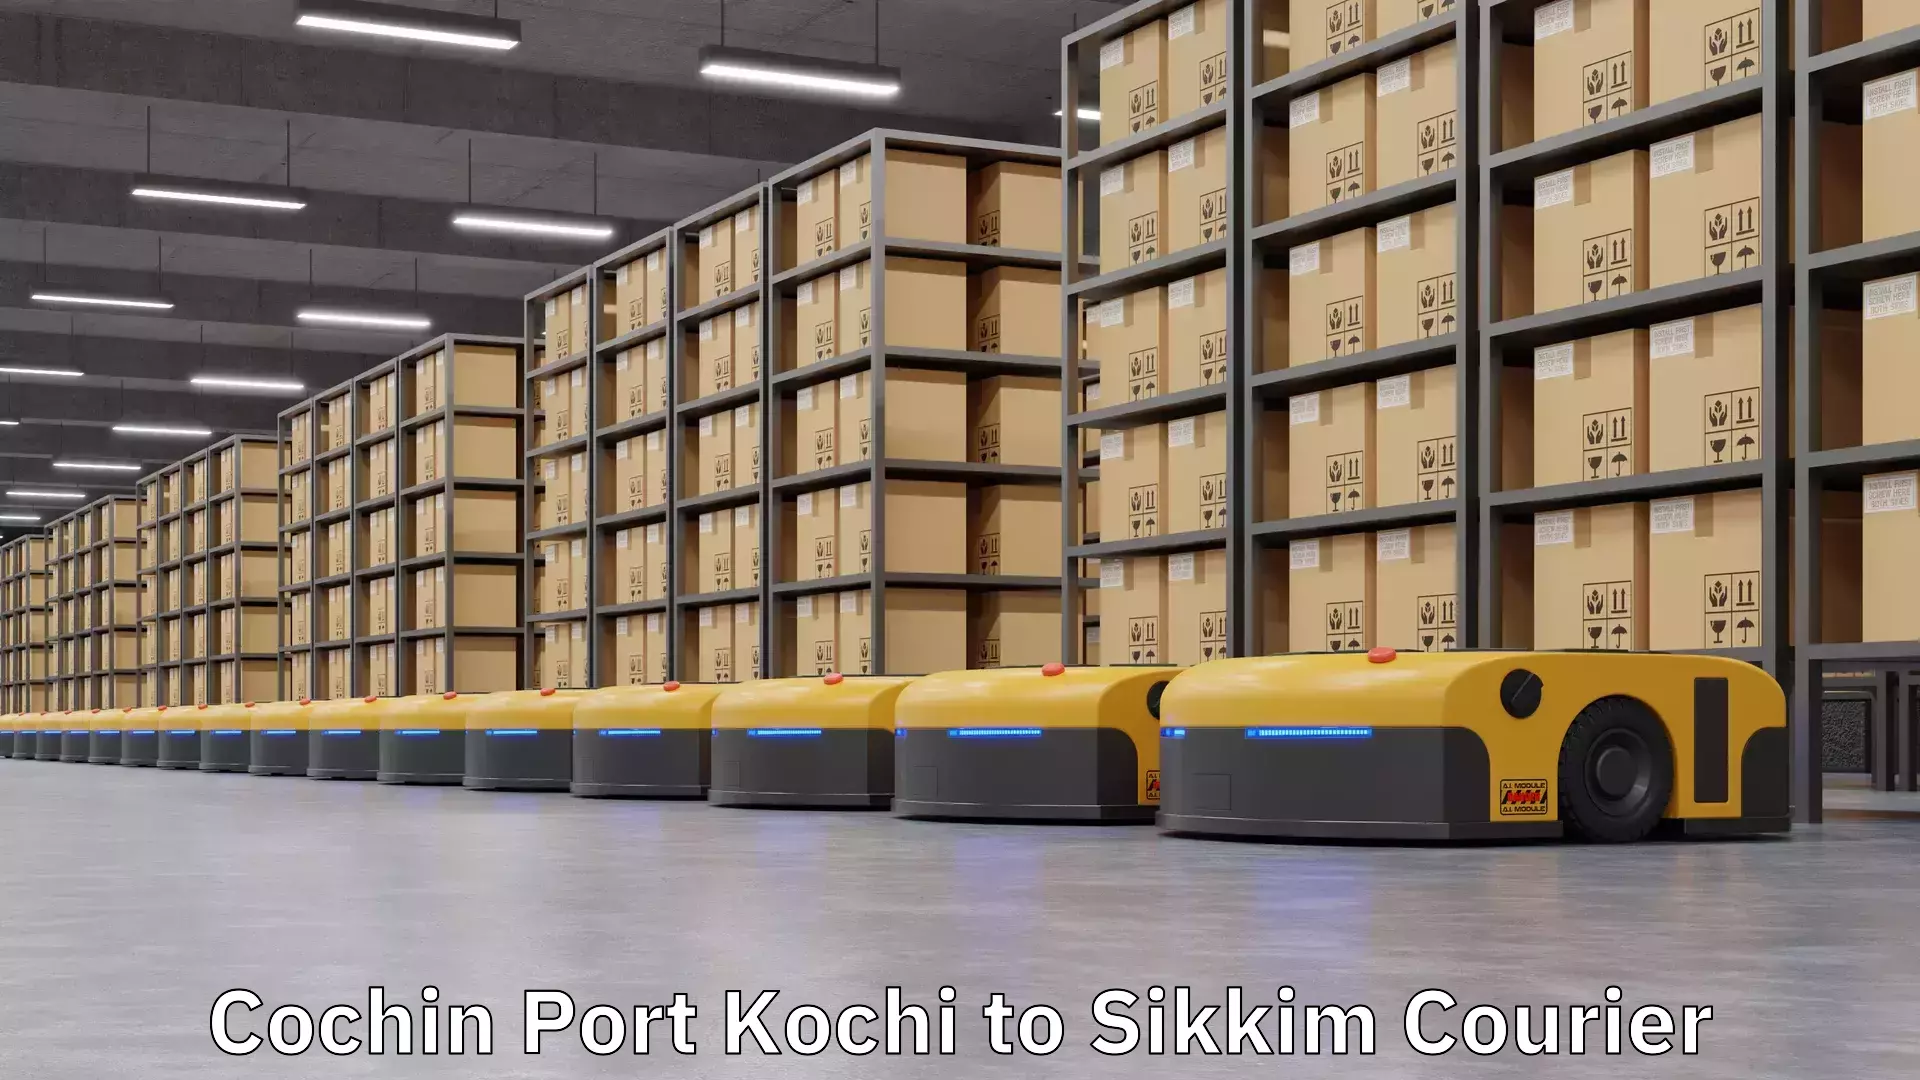 Courier service efficiency Cochin Port Kochi to Sikkim